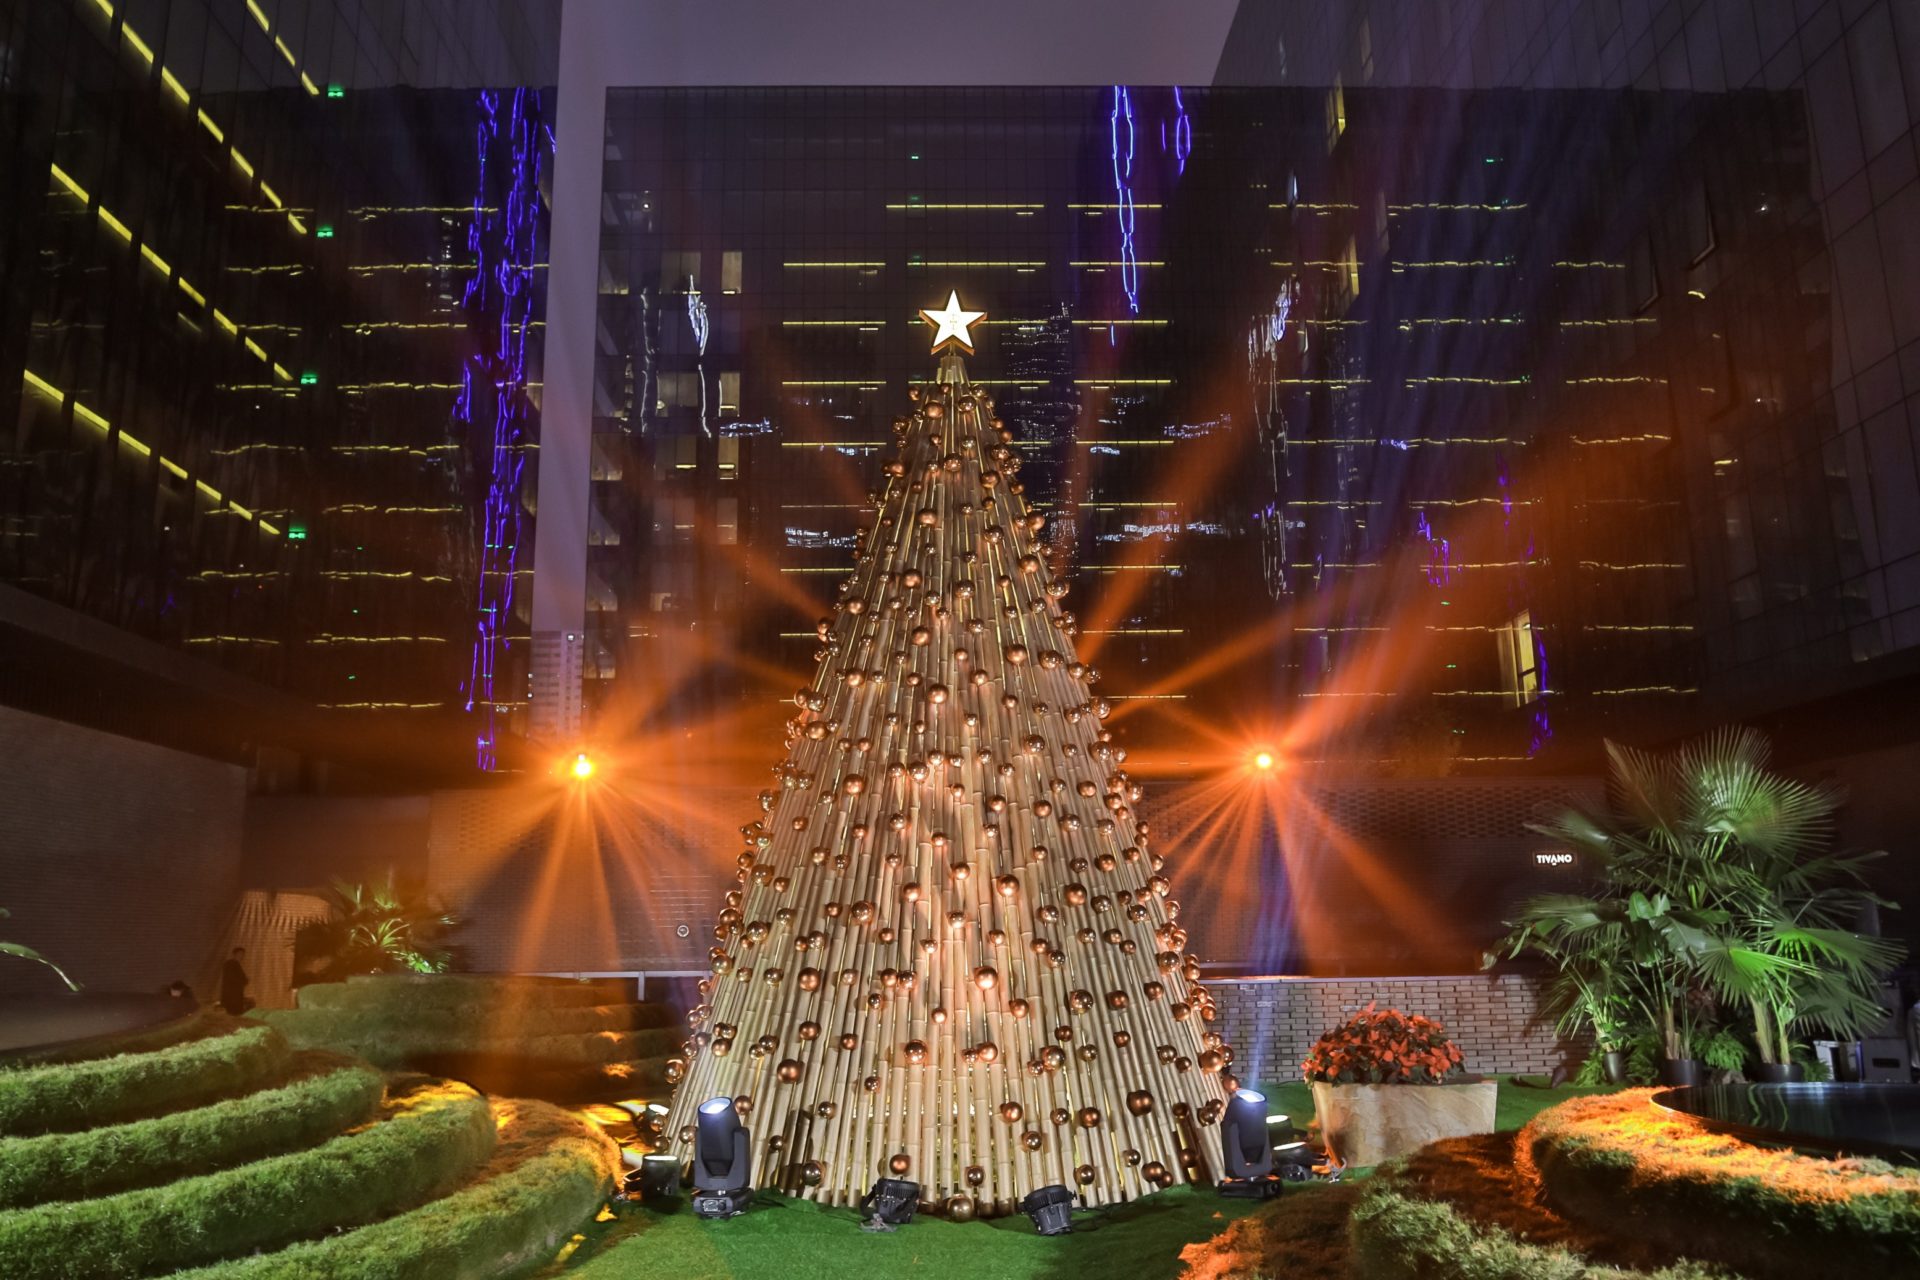 The Temple House Chengdu Christmas tree 2020